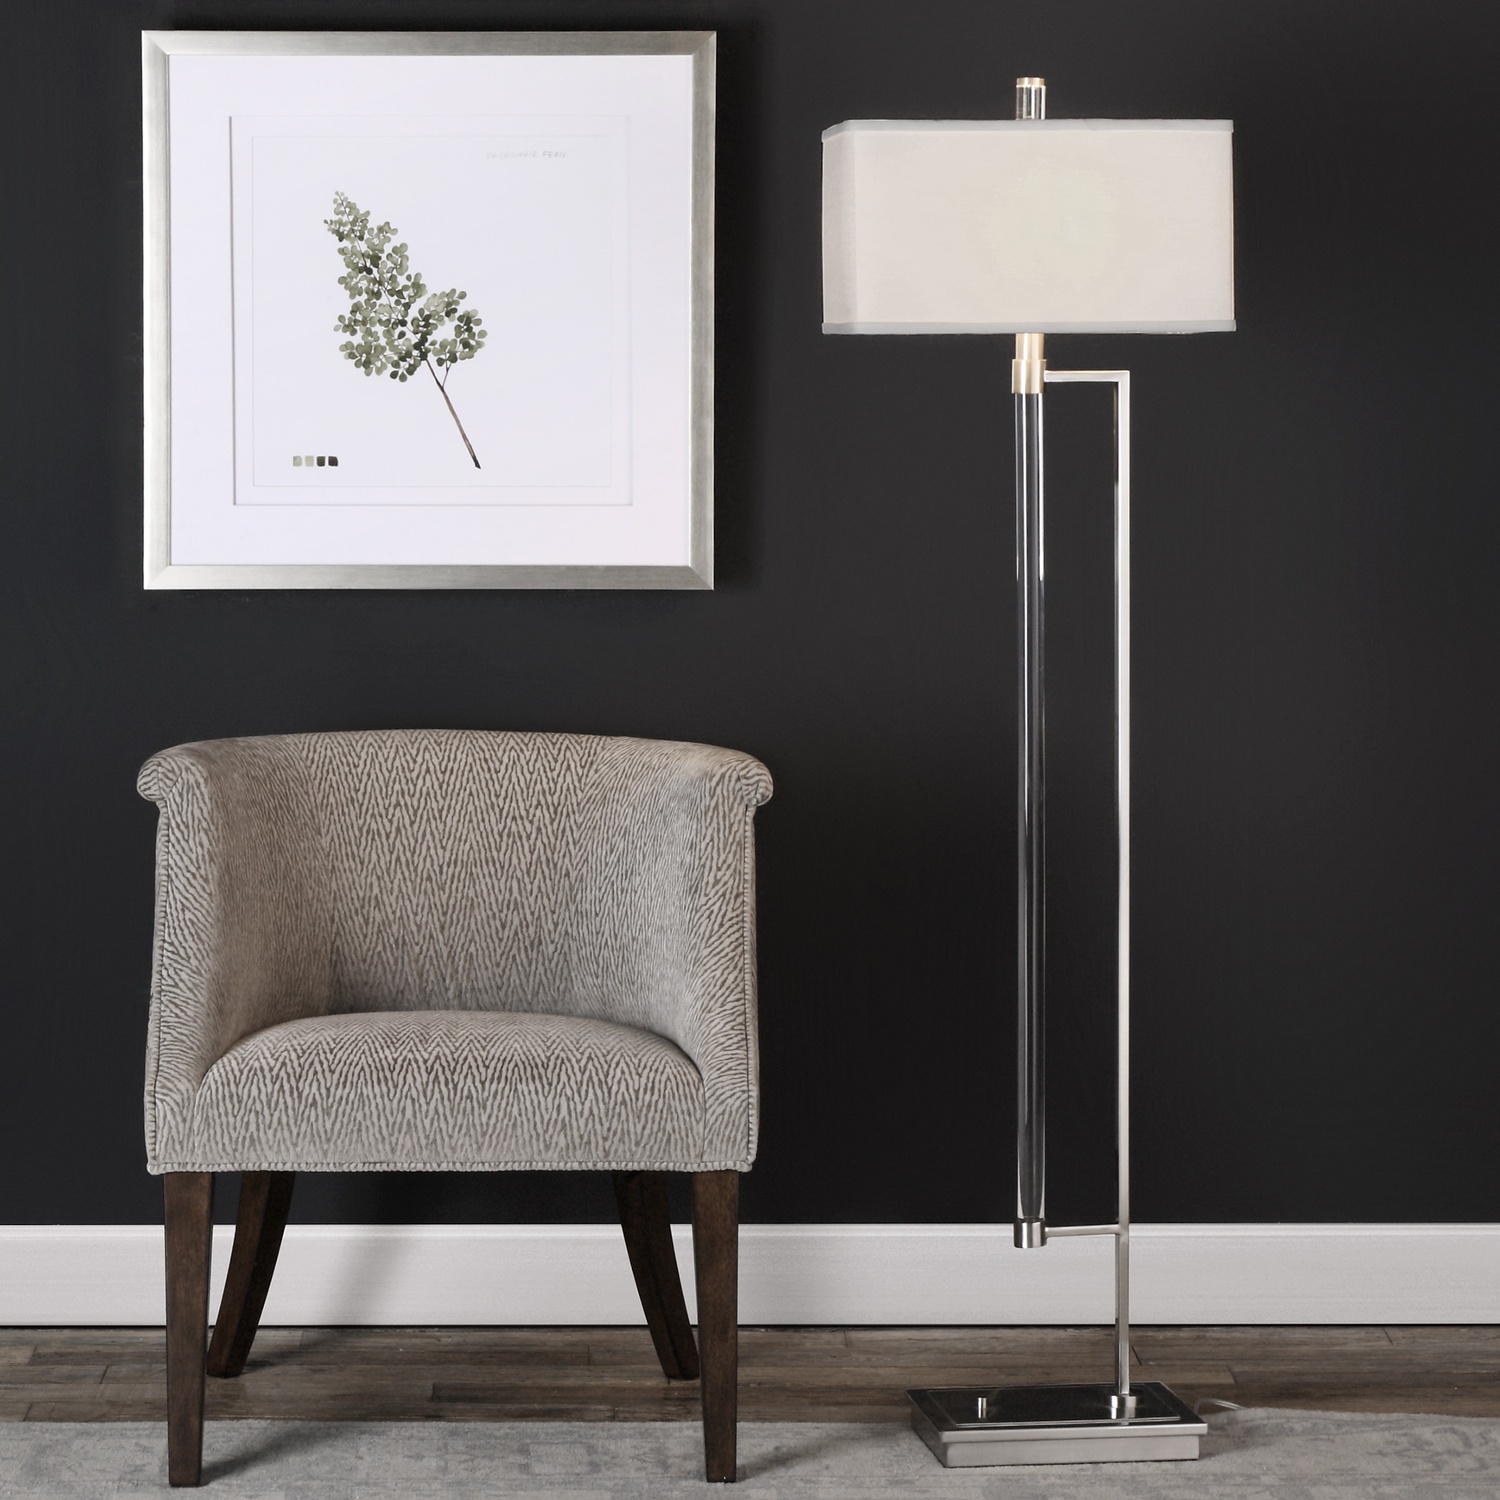 Mannan-Modern Floor Lamp